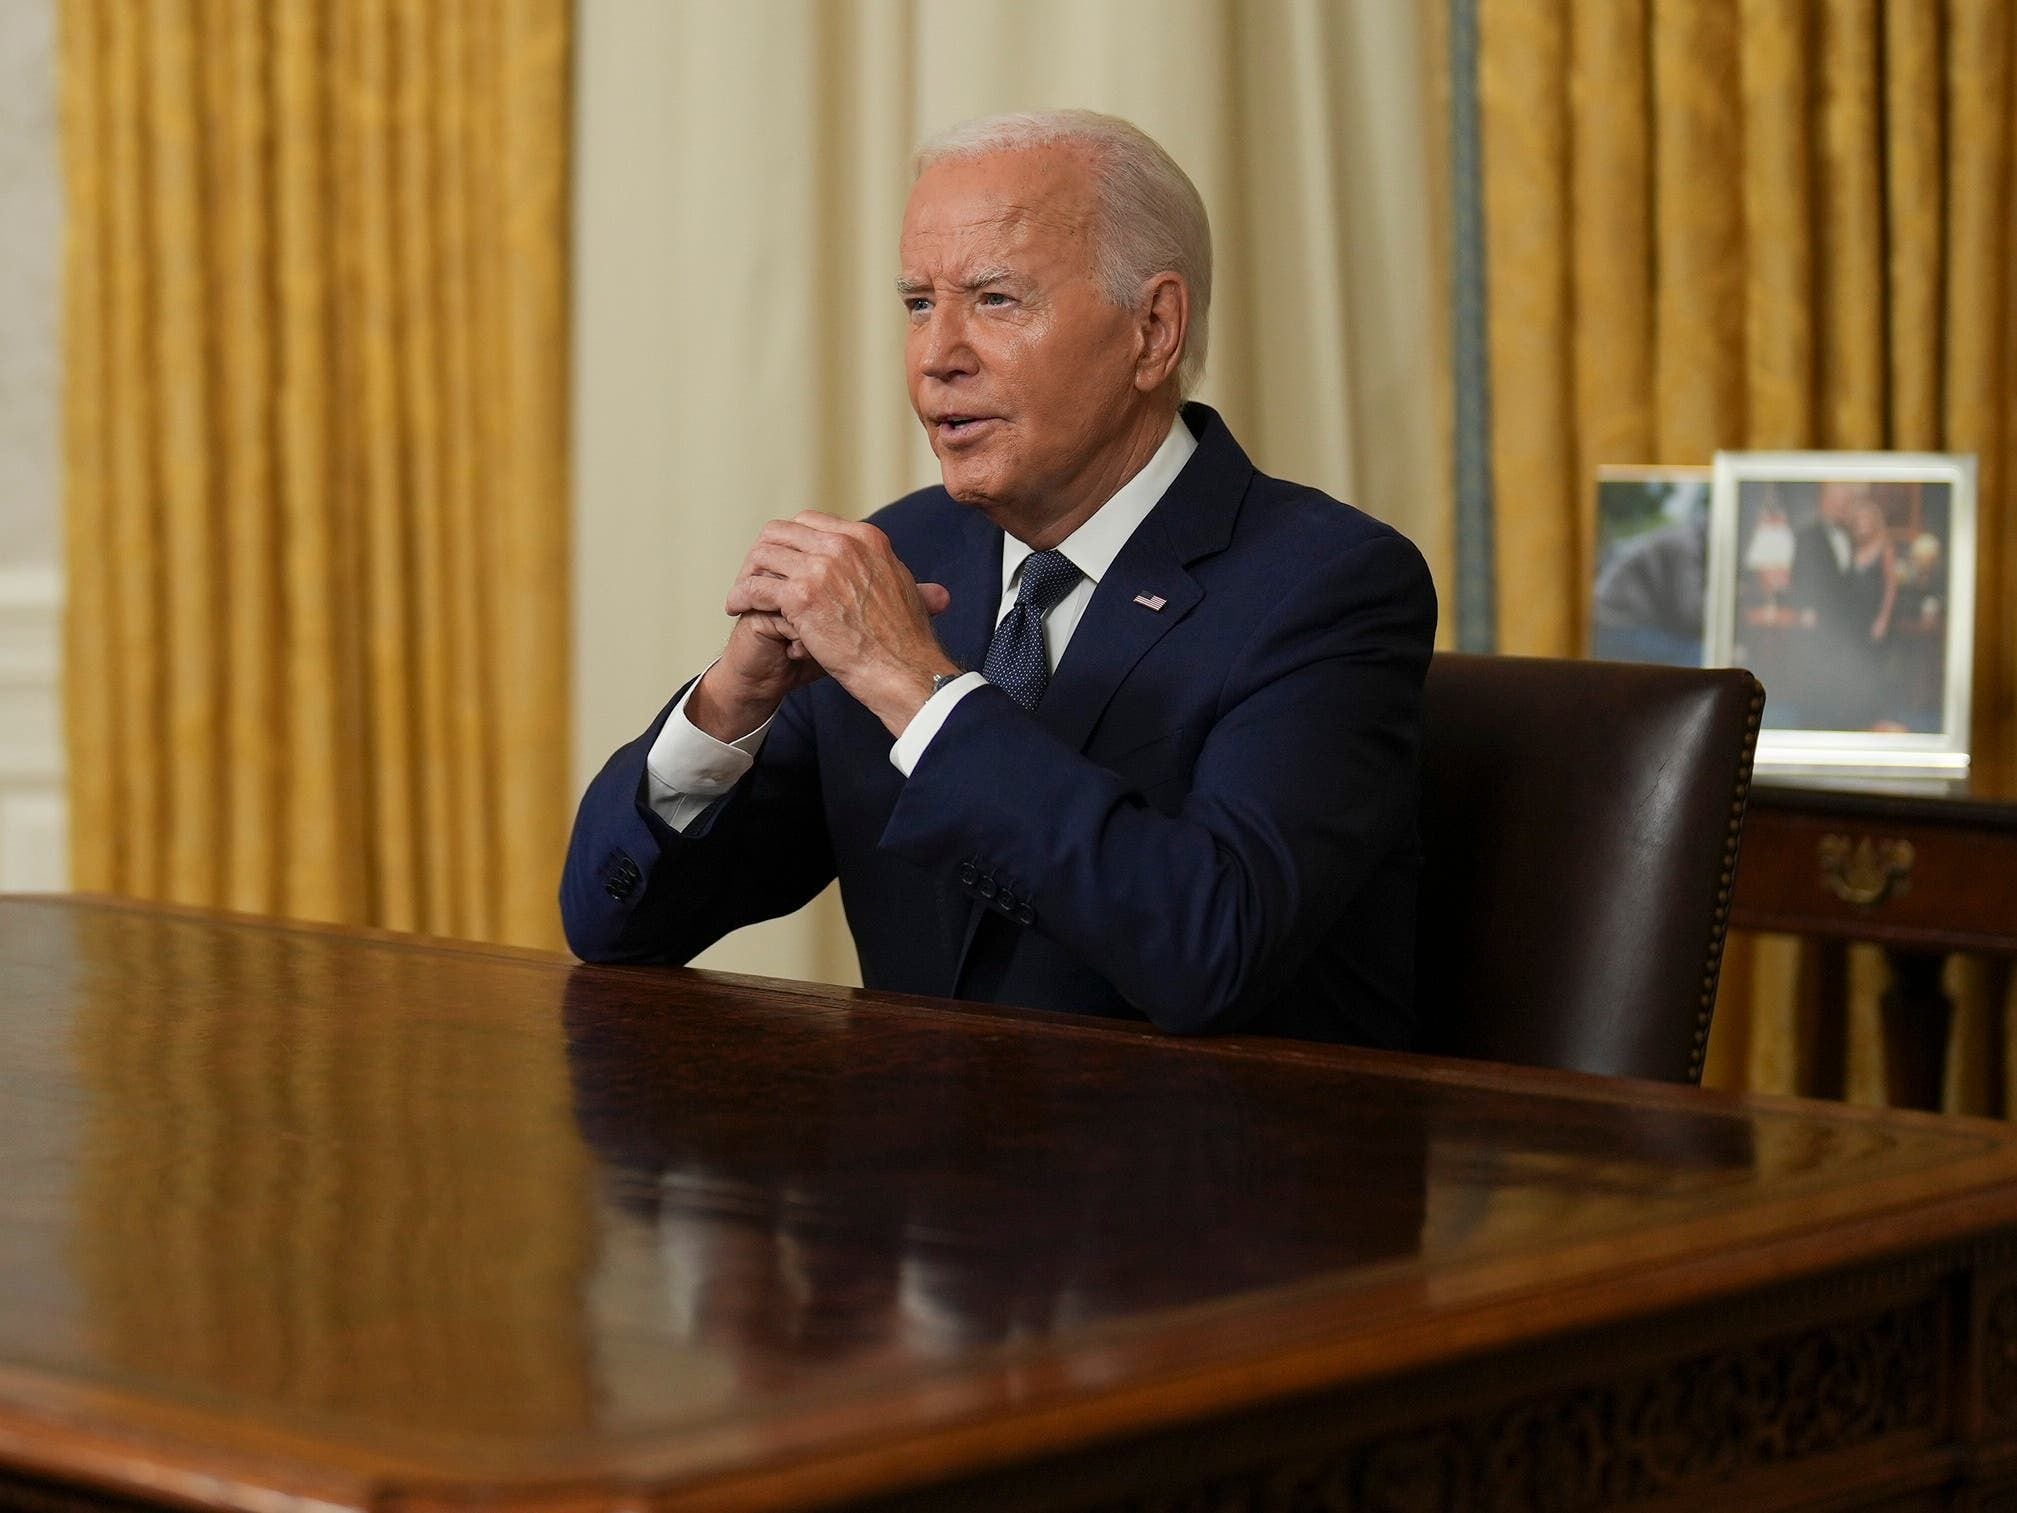 Biden warns of election-year rhetoric in prime-time address